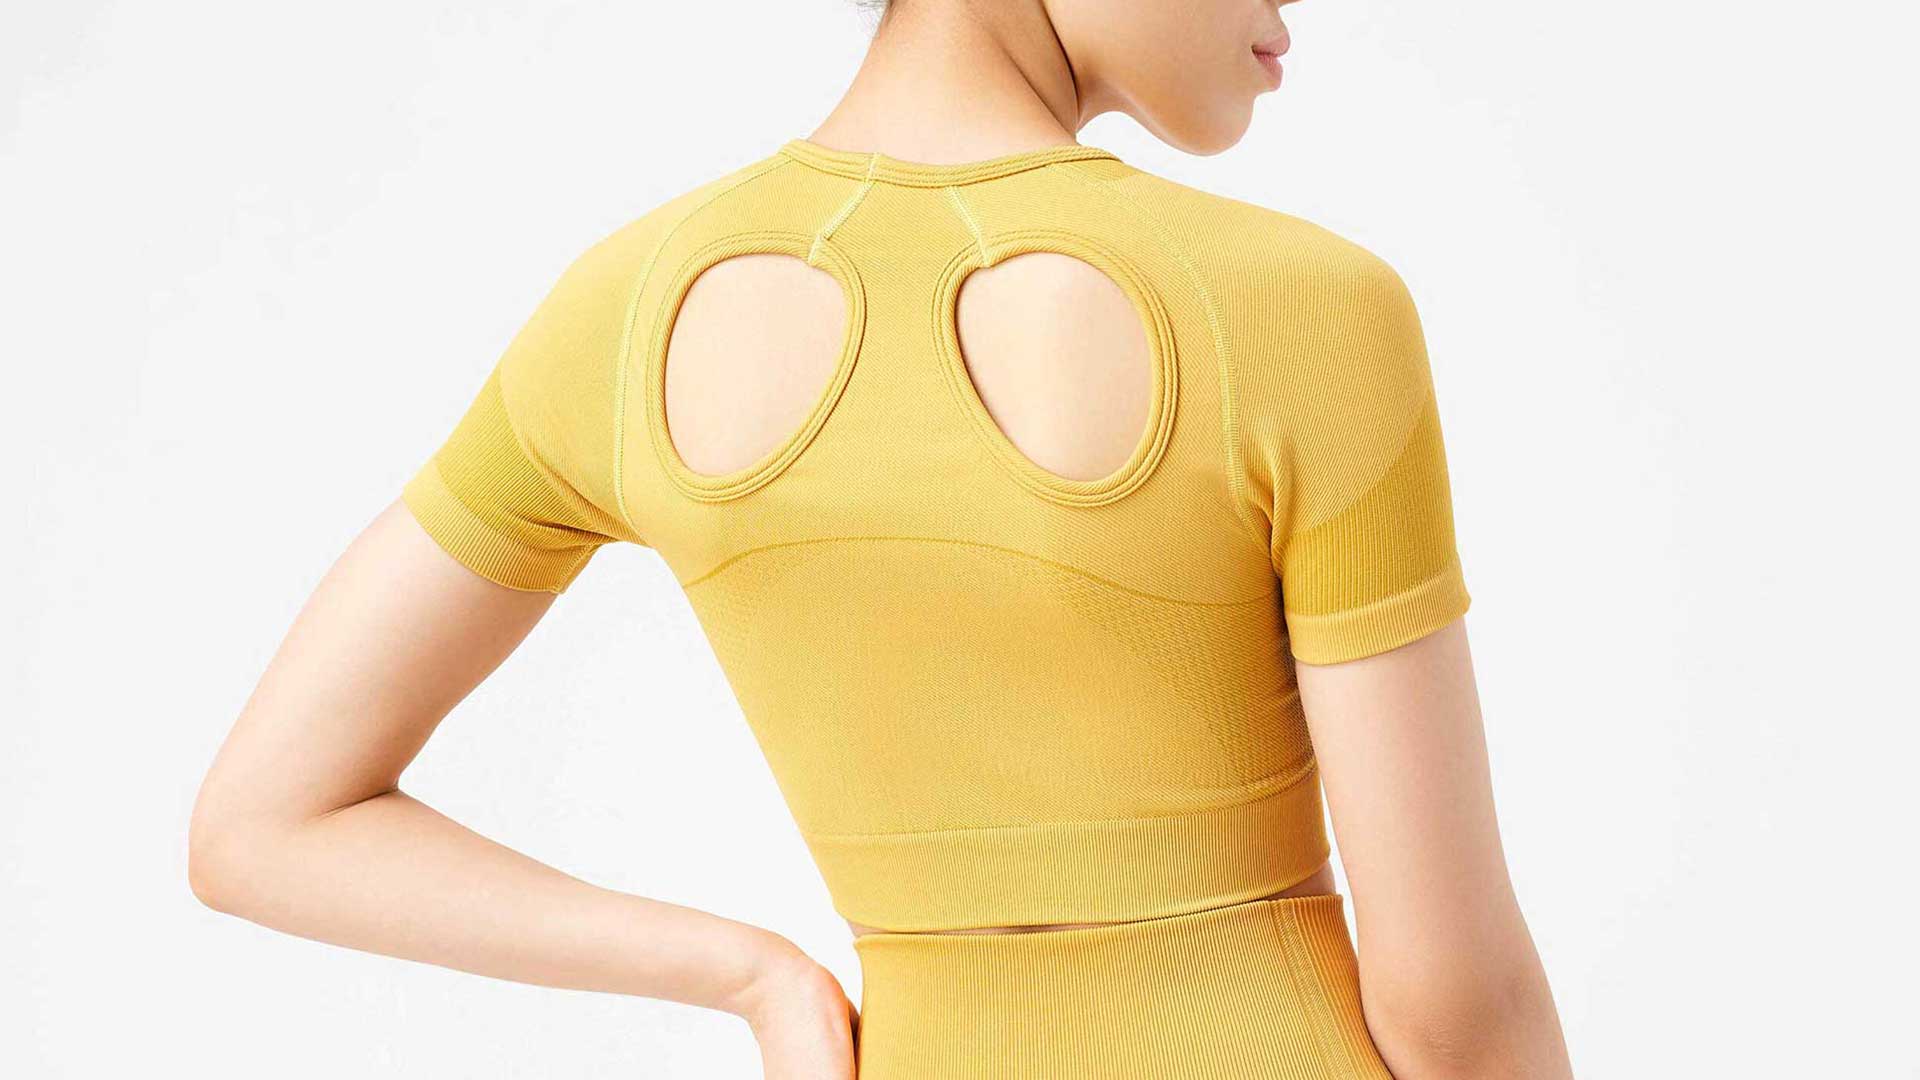 Comfortable yellow sports bra for women